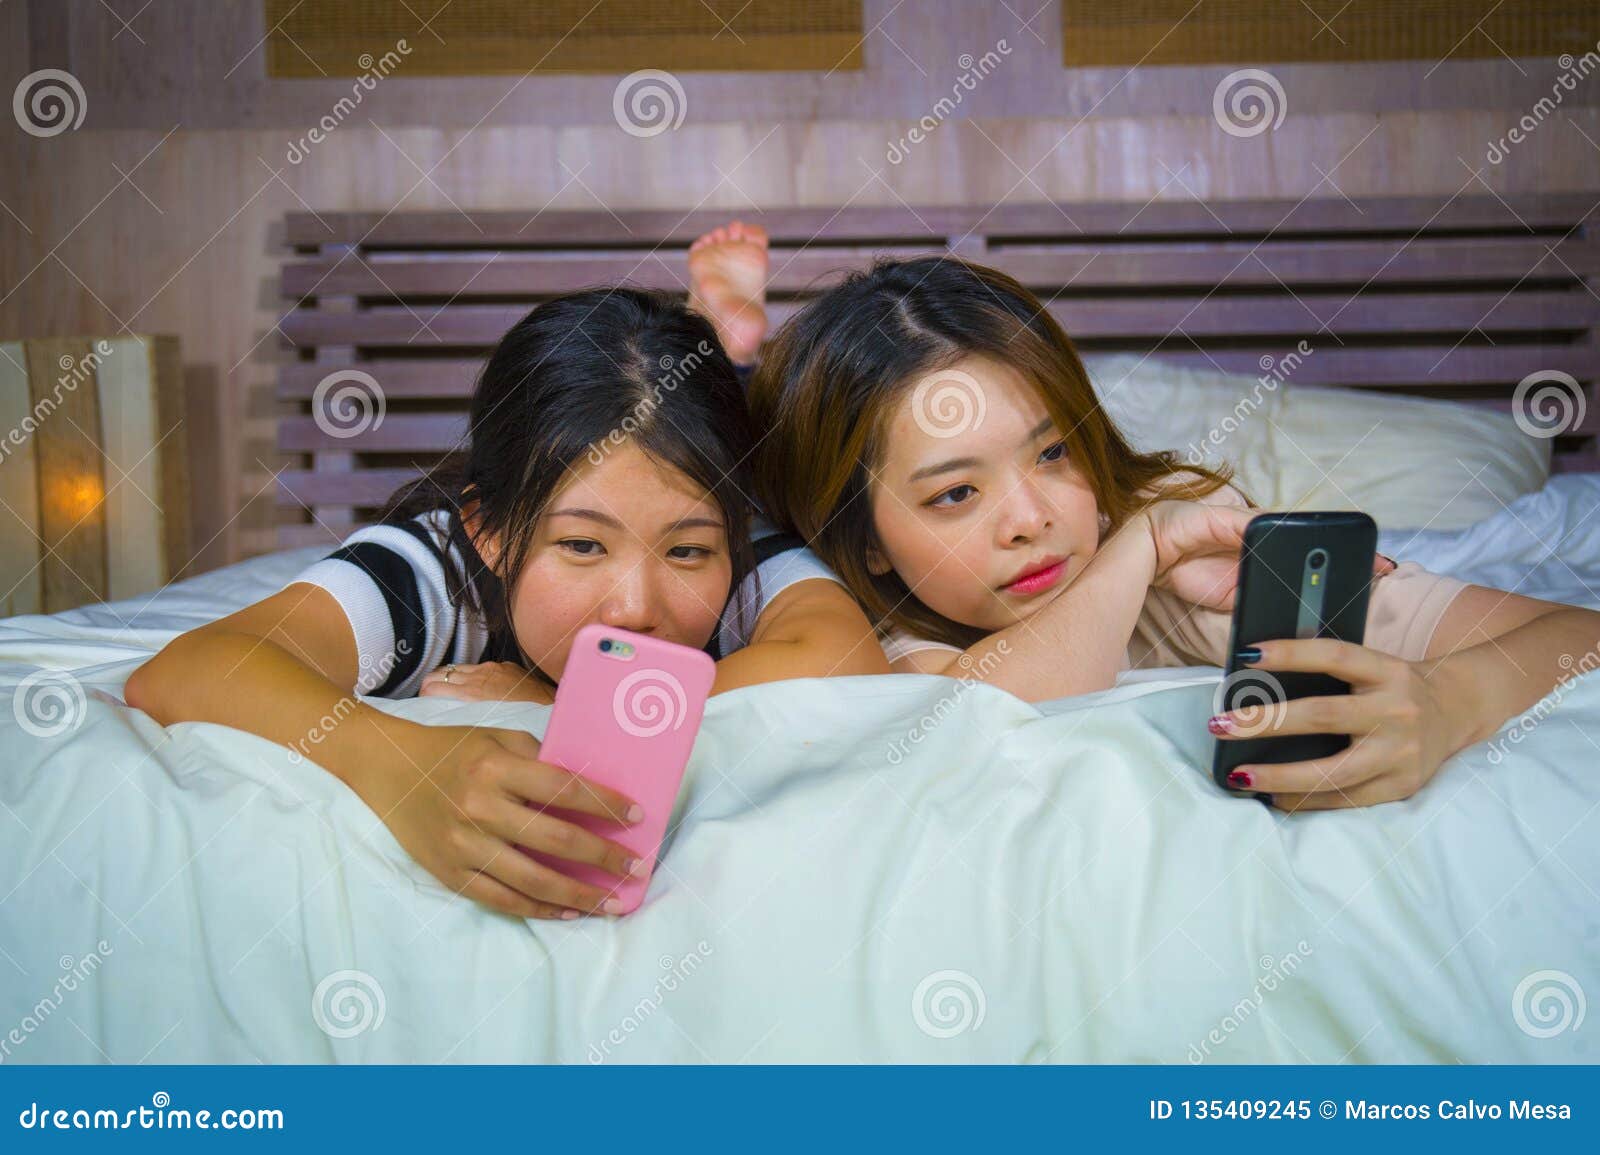 https://thumbs.dreamstime.com/z/young-happy-pretty-asian-korean-girlfriends-sitting-home-bedroom-laughing-talking-having-fun-using-internet-social-two-135409245.jpg